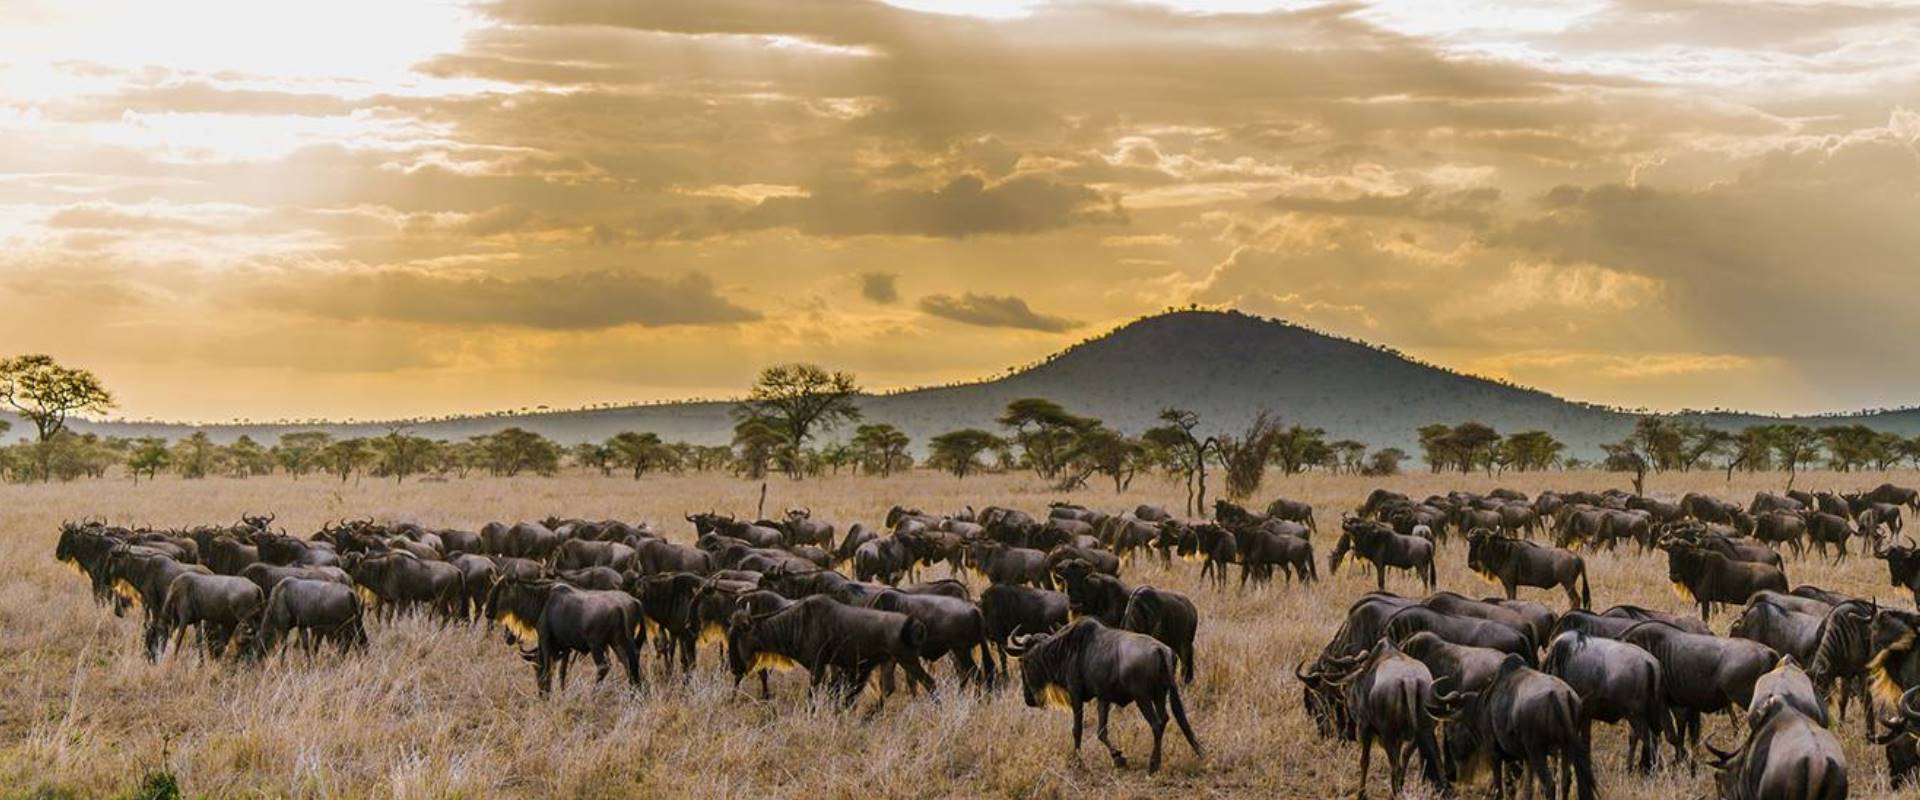 The East Africa Wildlife Safari